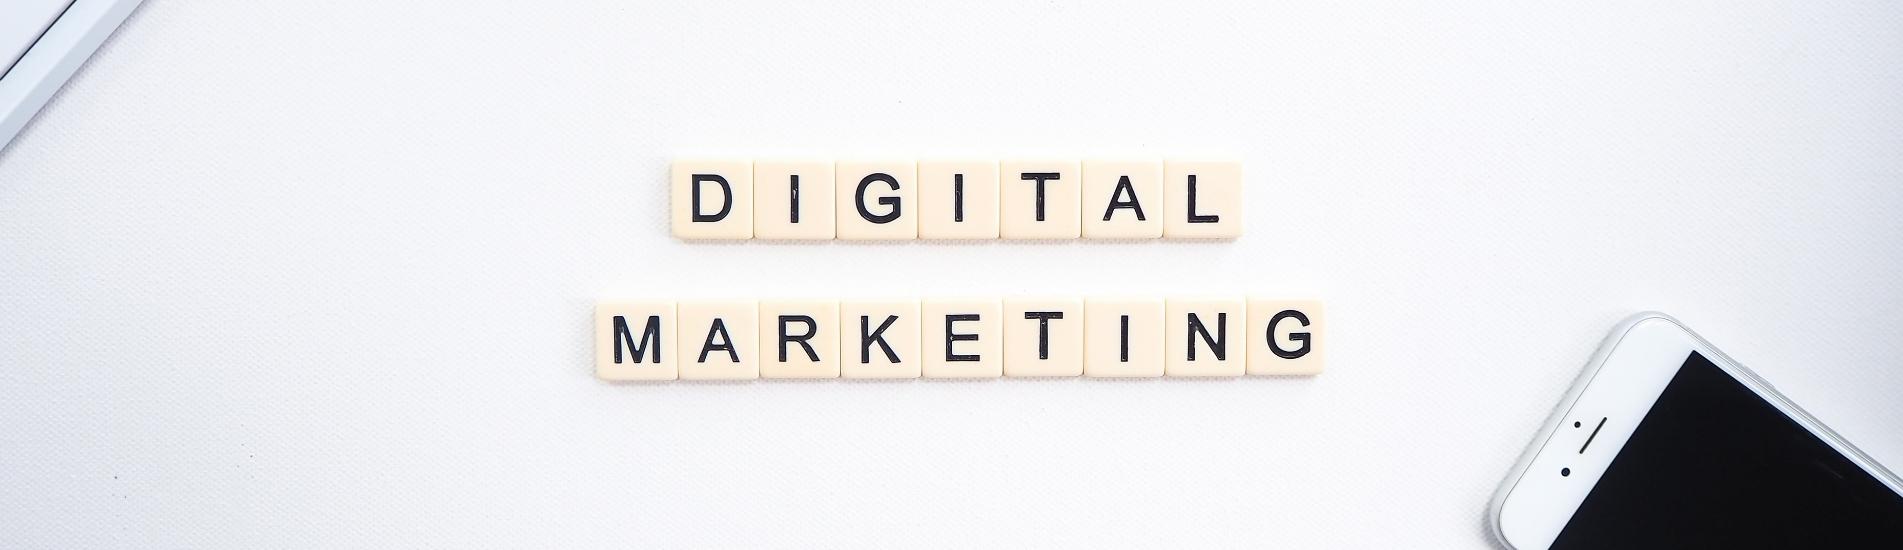 Tendencias de Marketing Digital para 2022